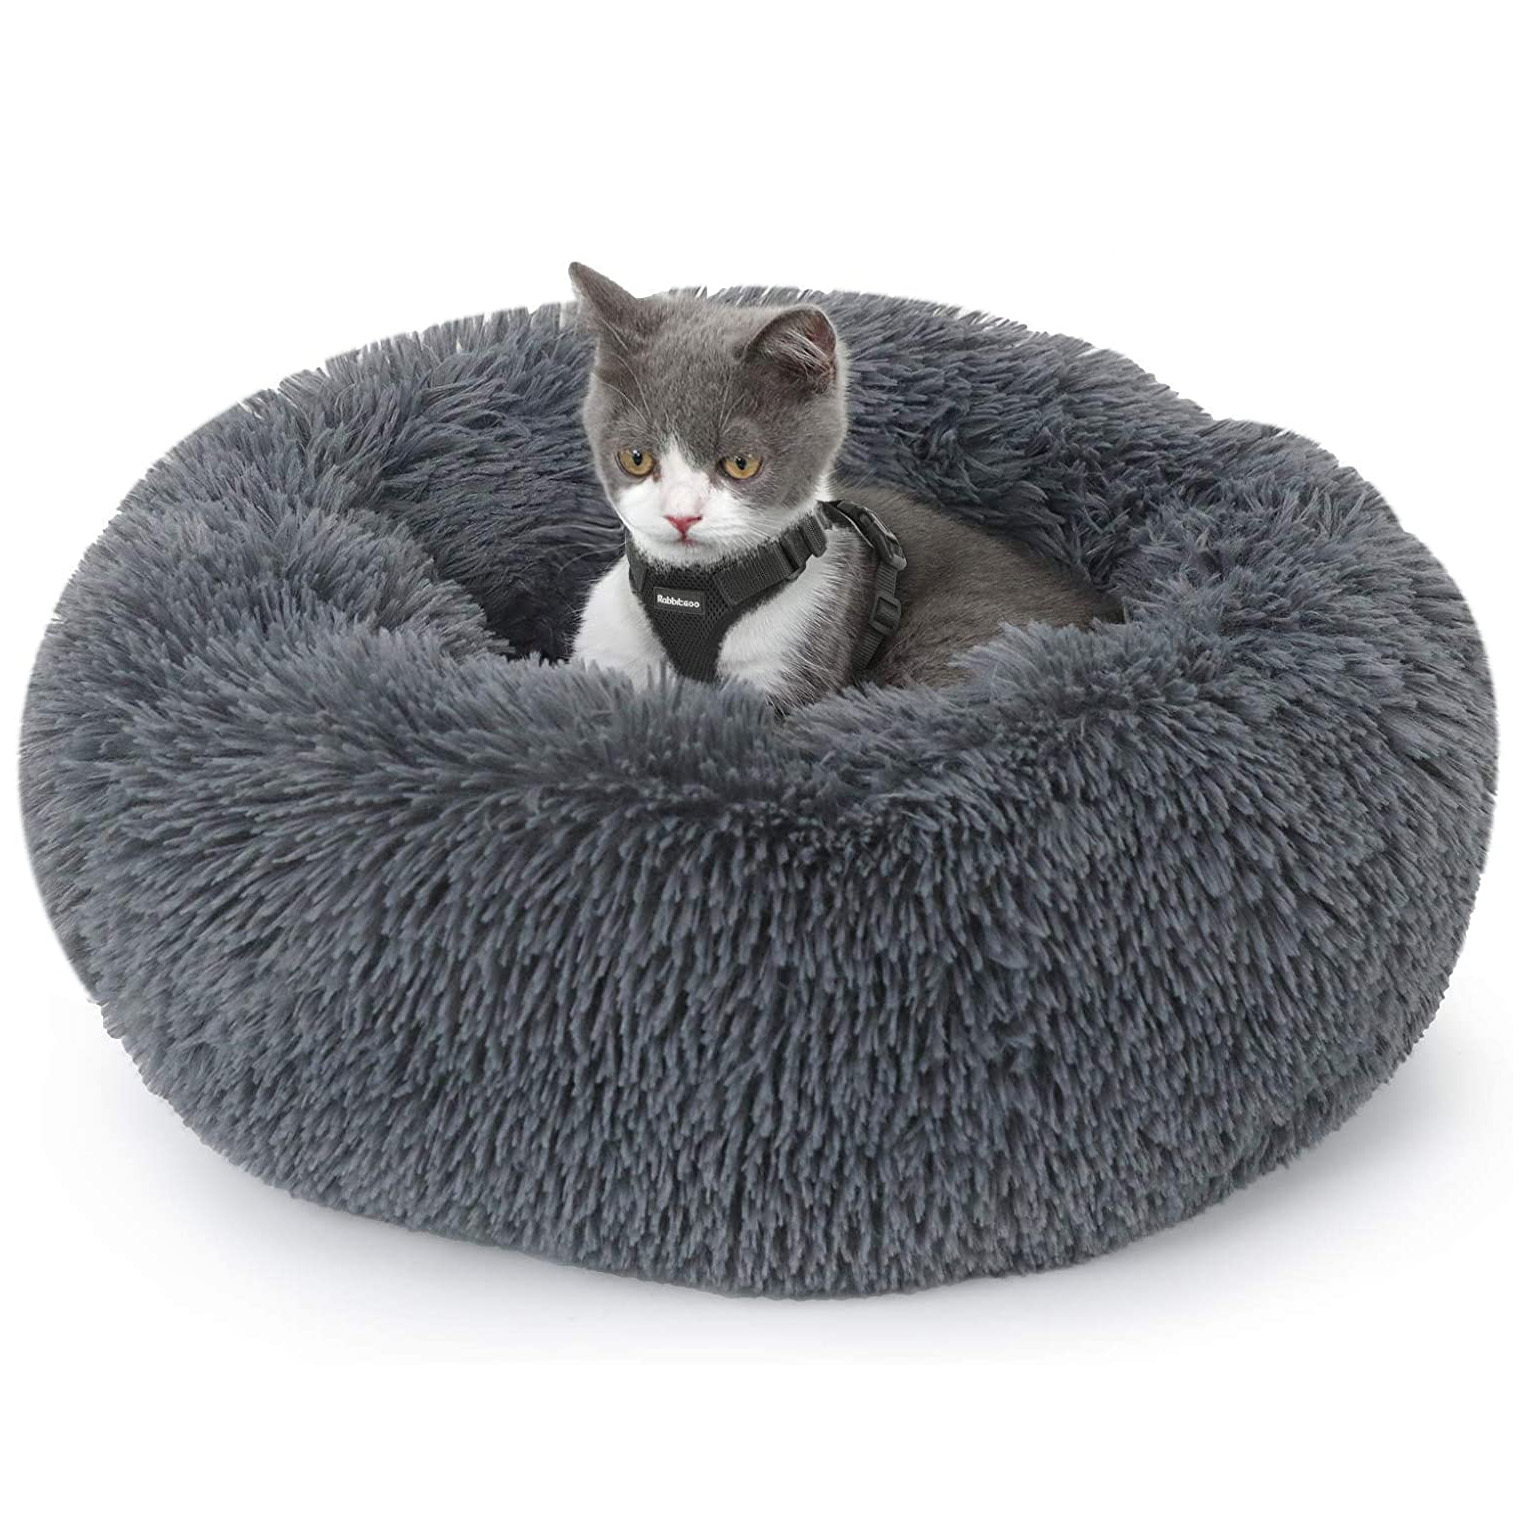 Cozy Plush Soft Fluffy Pet Bed Dog Cat Bed (Dark Grey, 50cm)